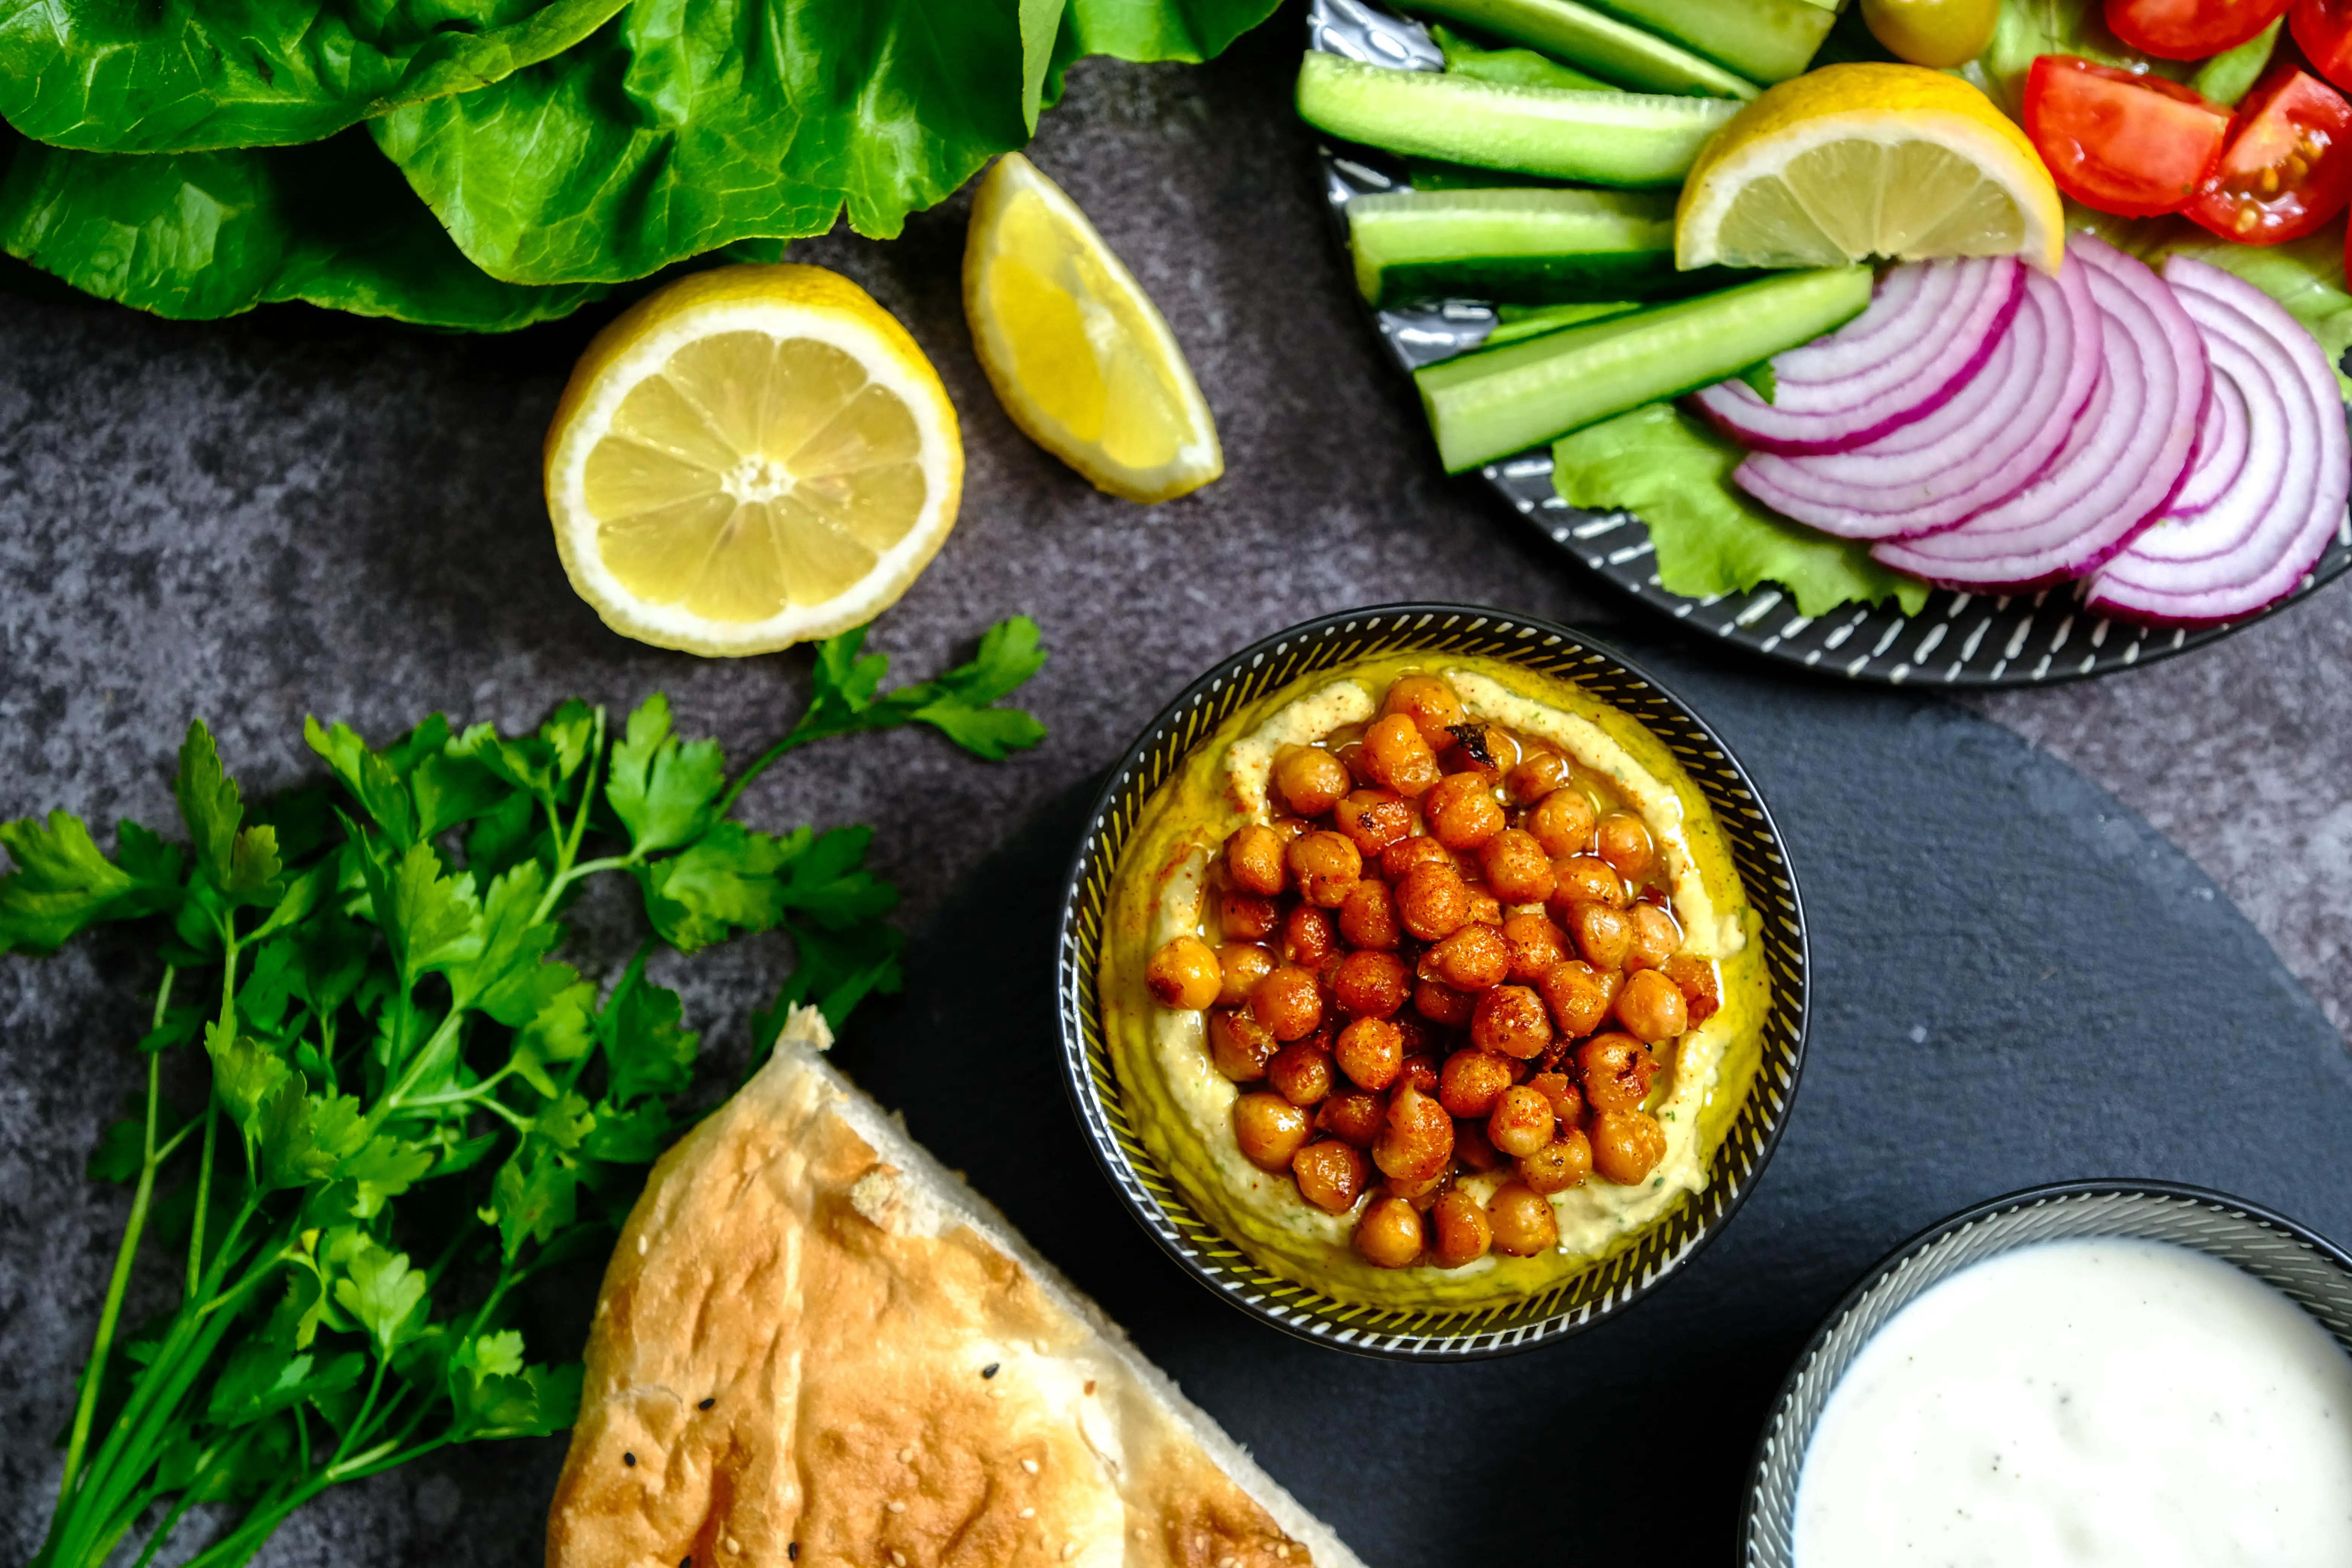 Lebanese Musabaha - Hummus with Chickpeas